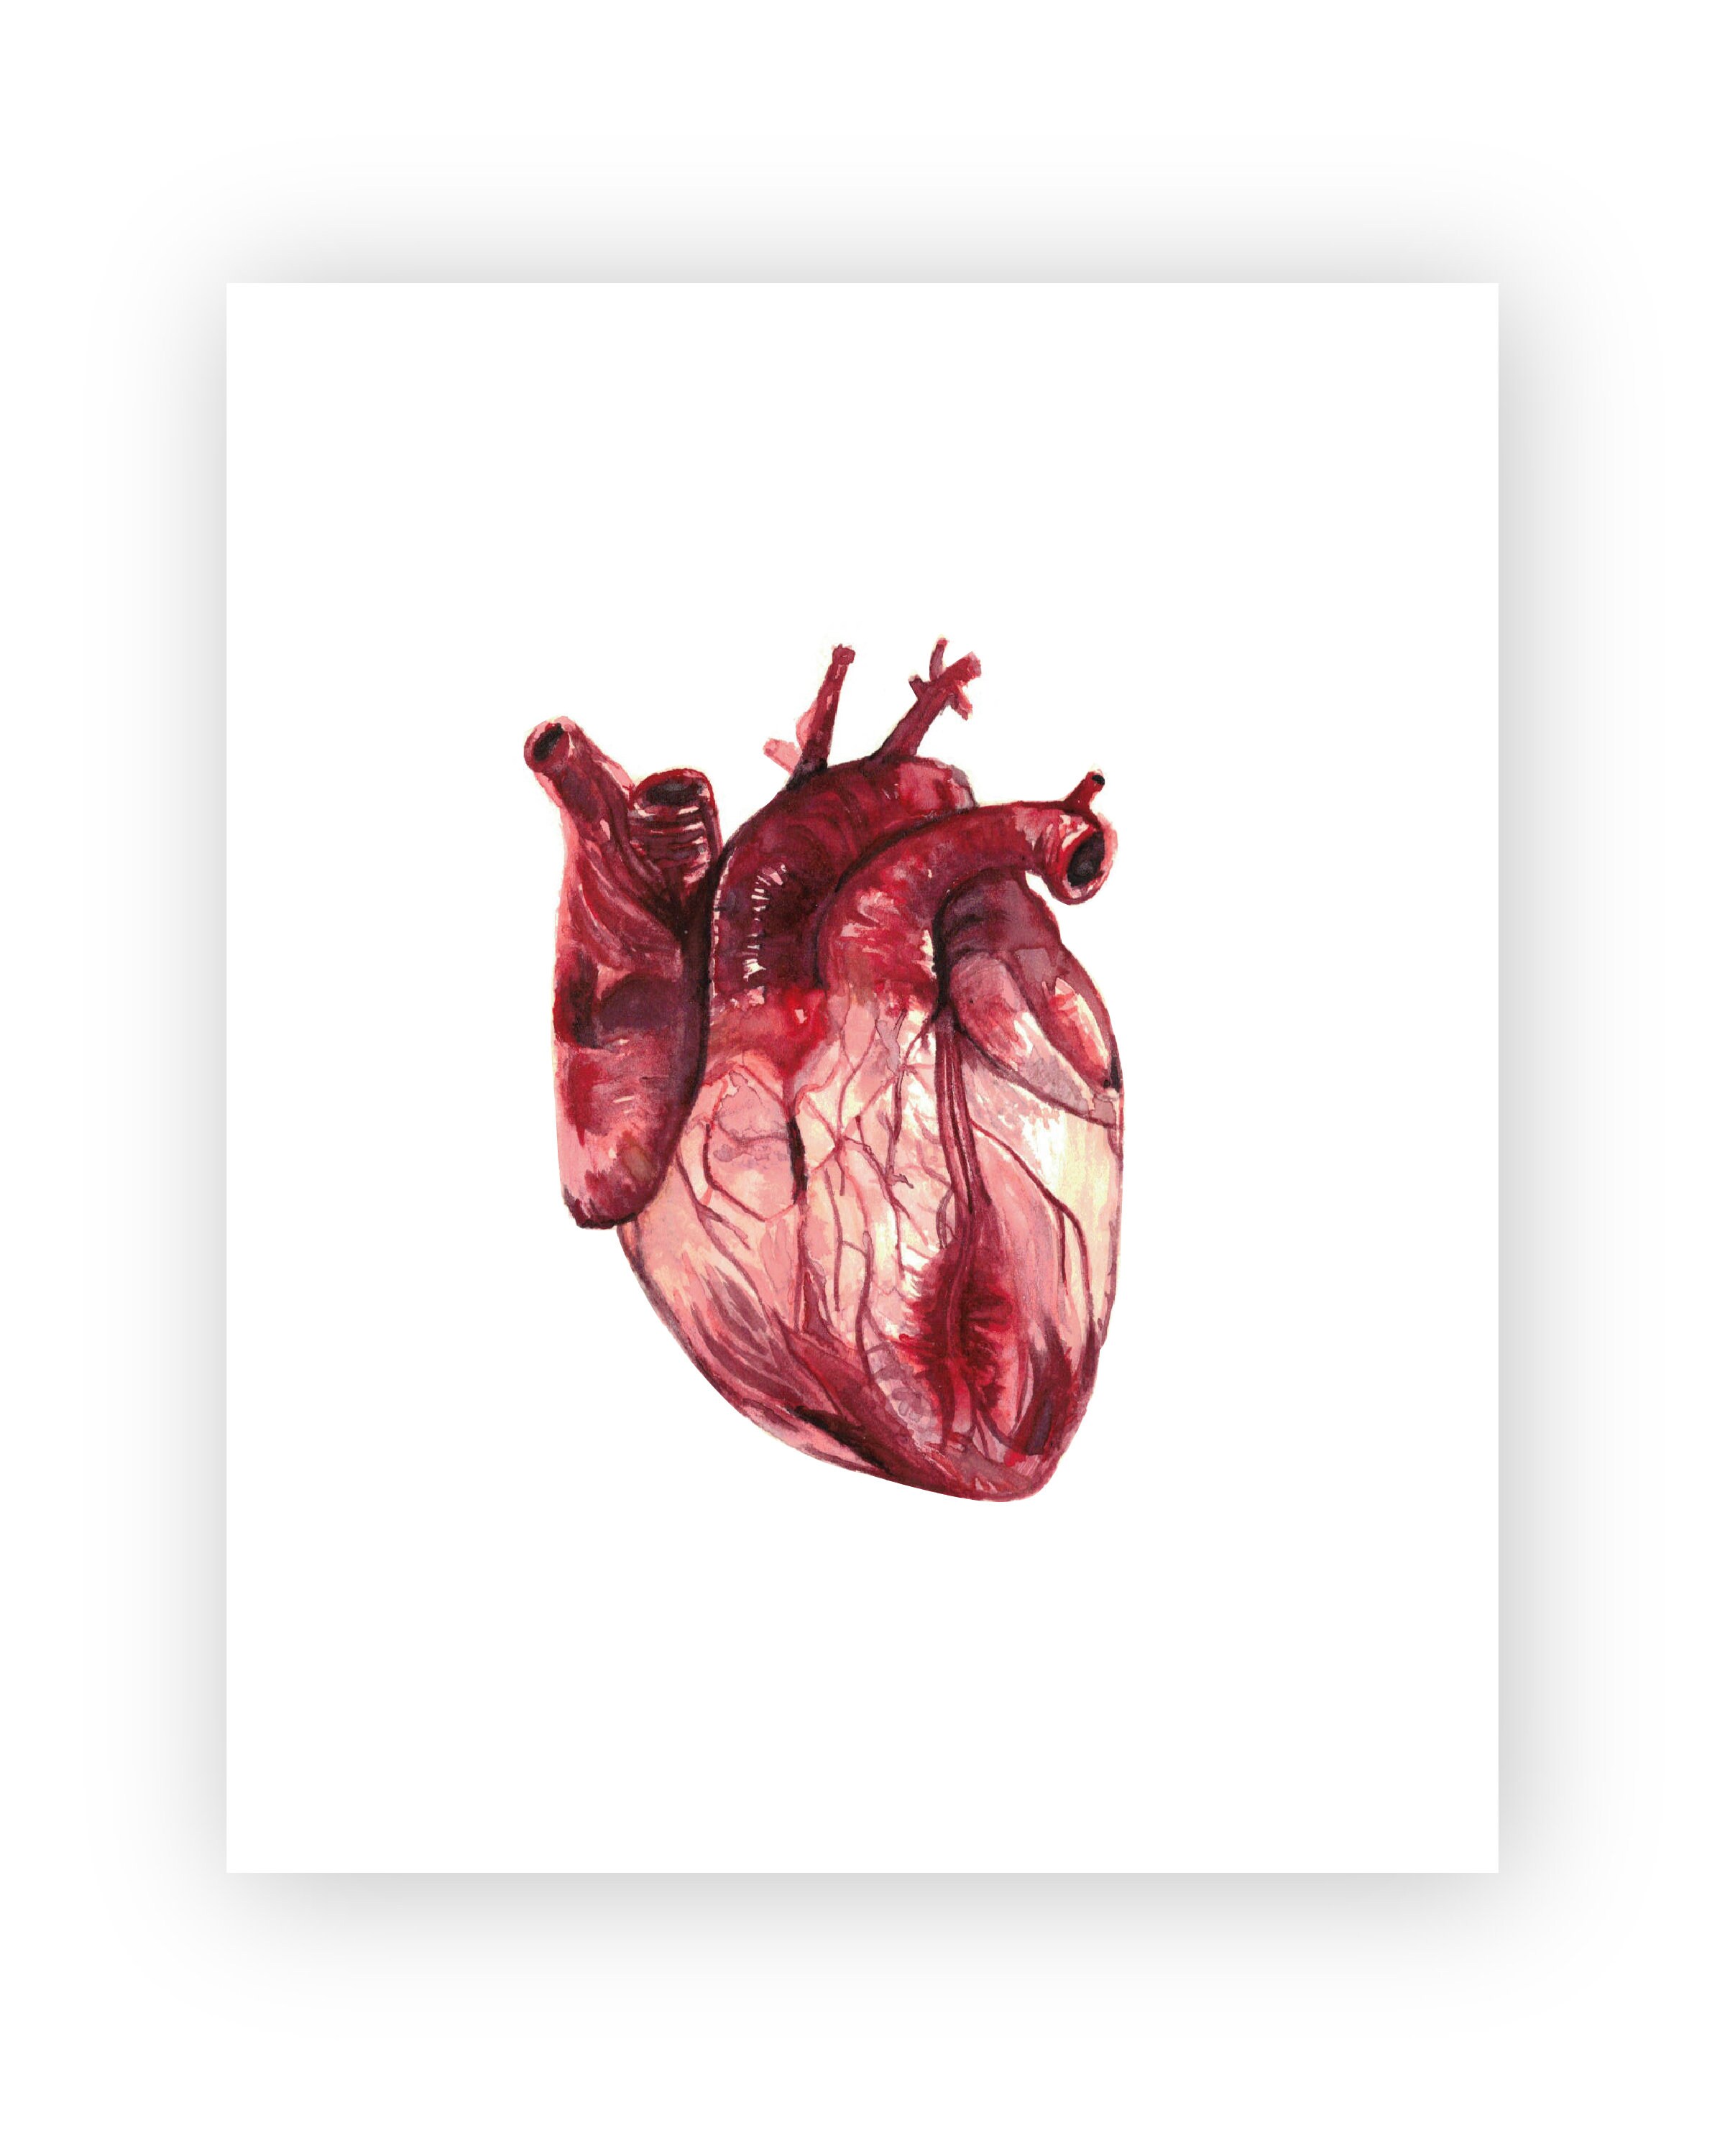 Anatomical human heart acrylic painting 8x8 inch fine art print